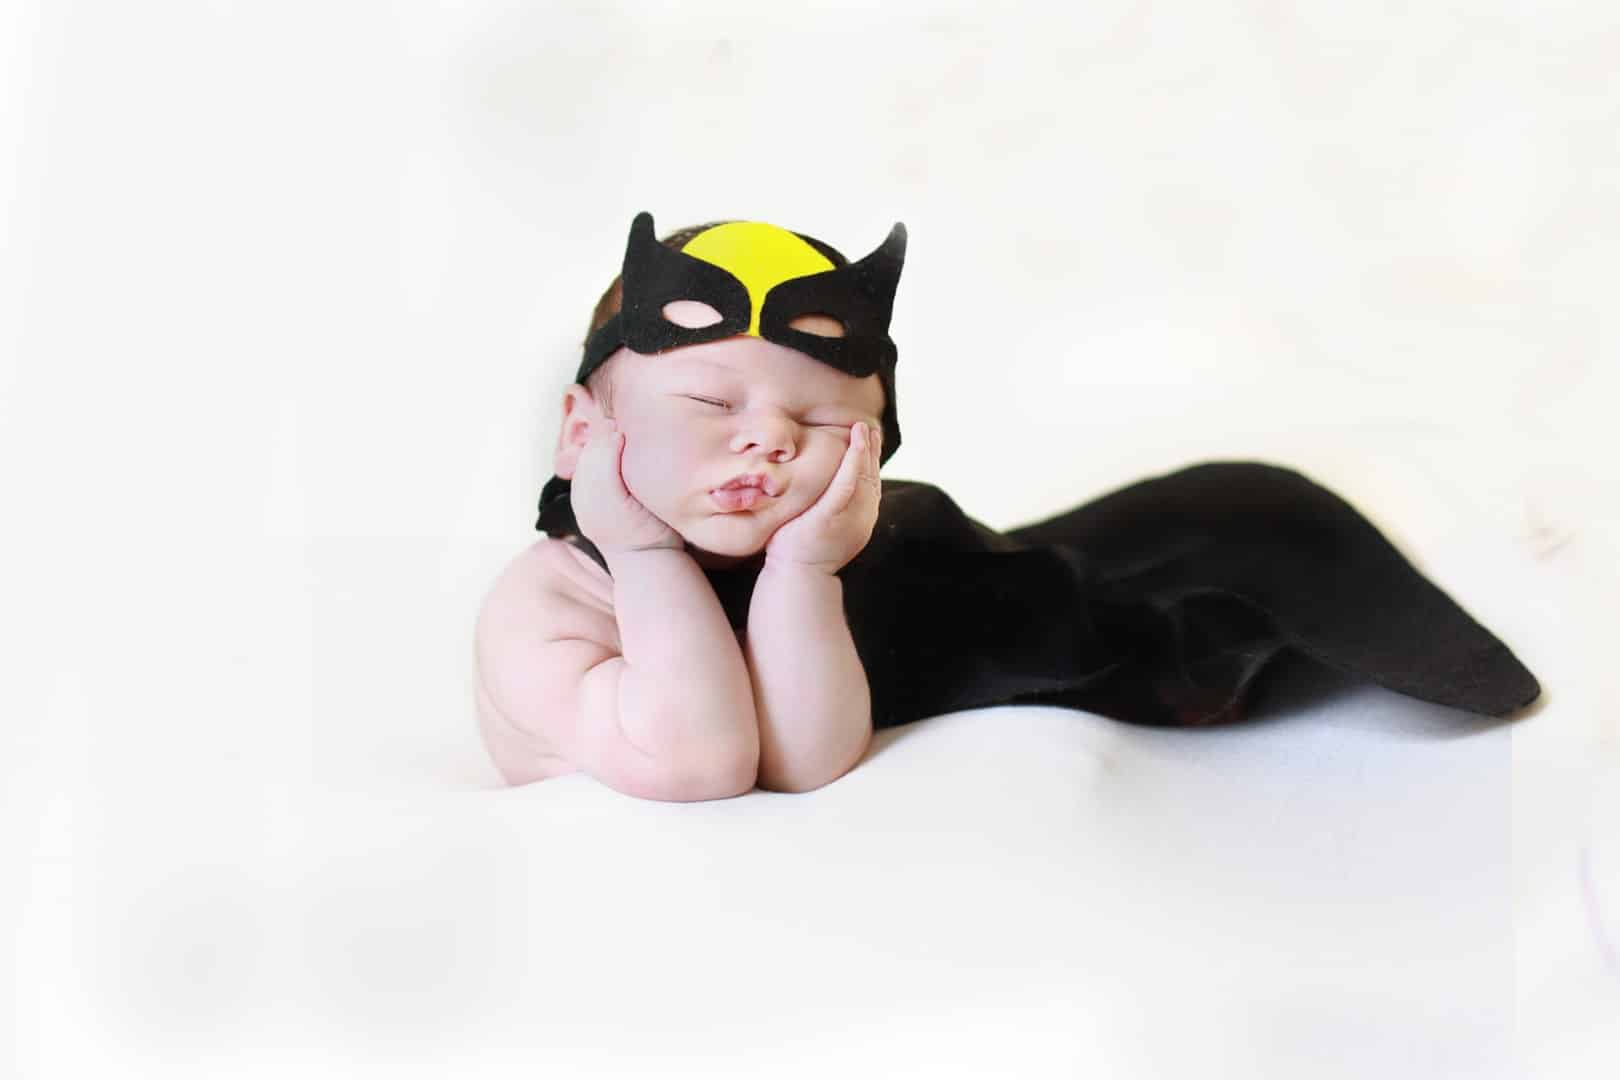 Sleeping newborn baby in a superhero suit